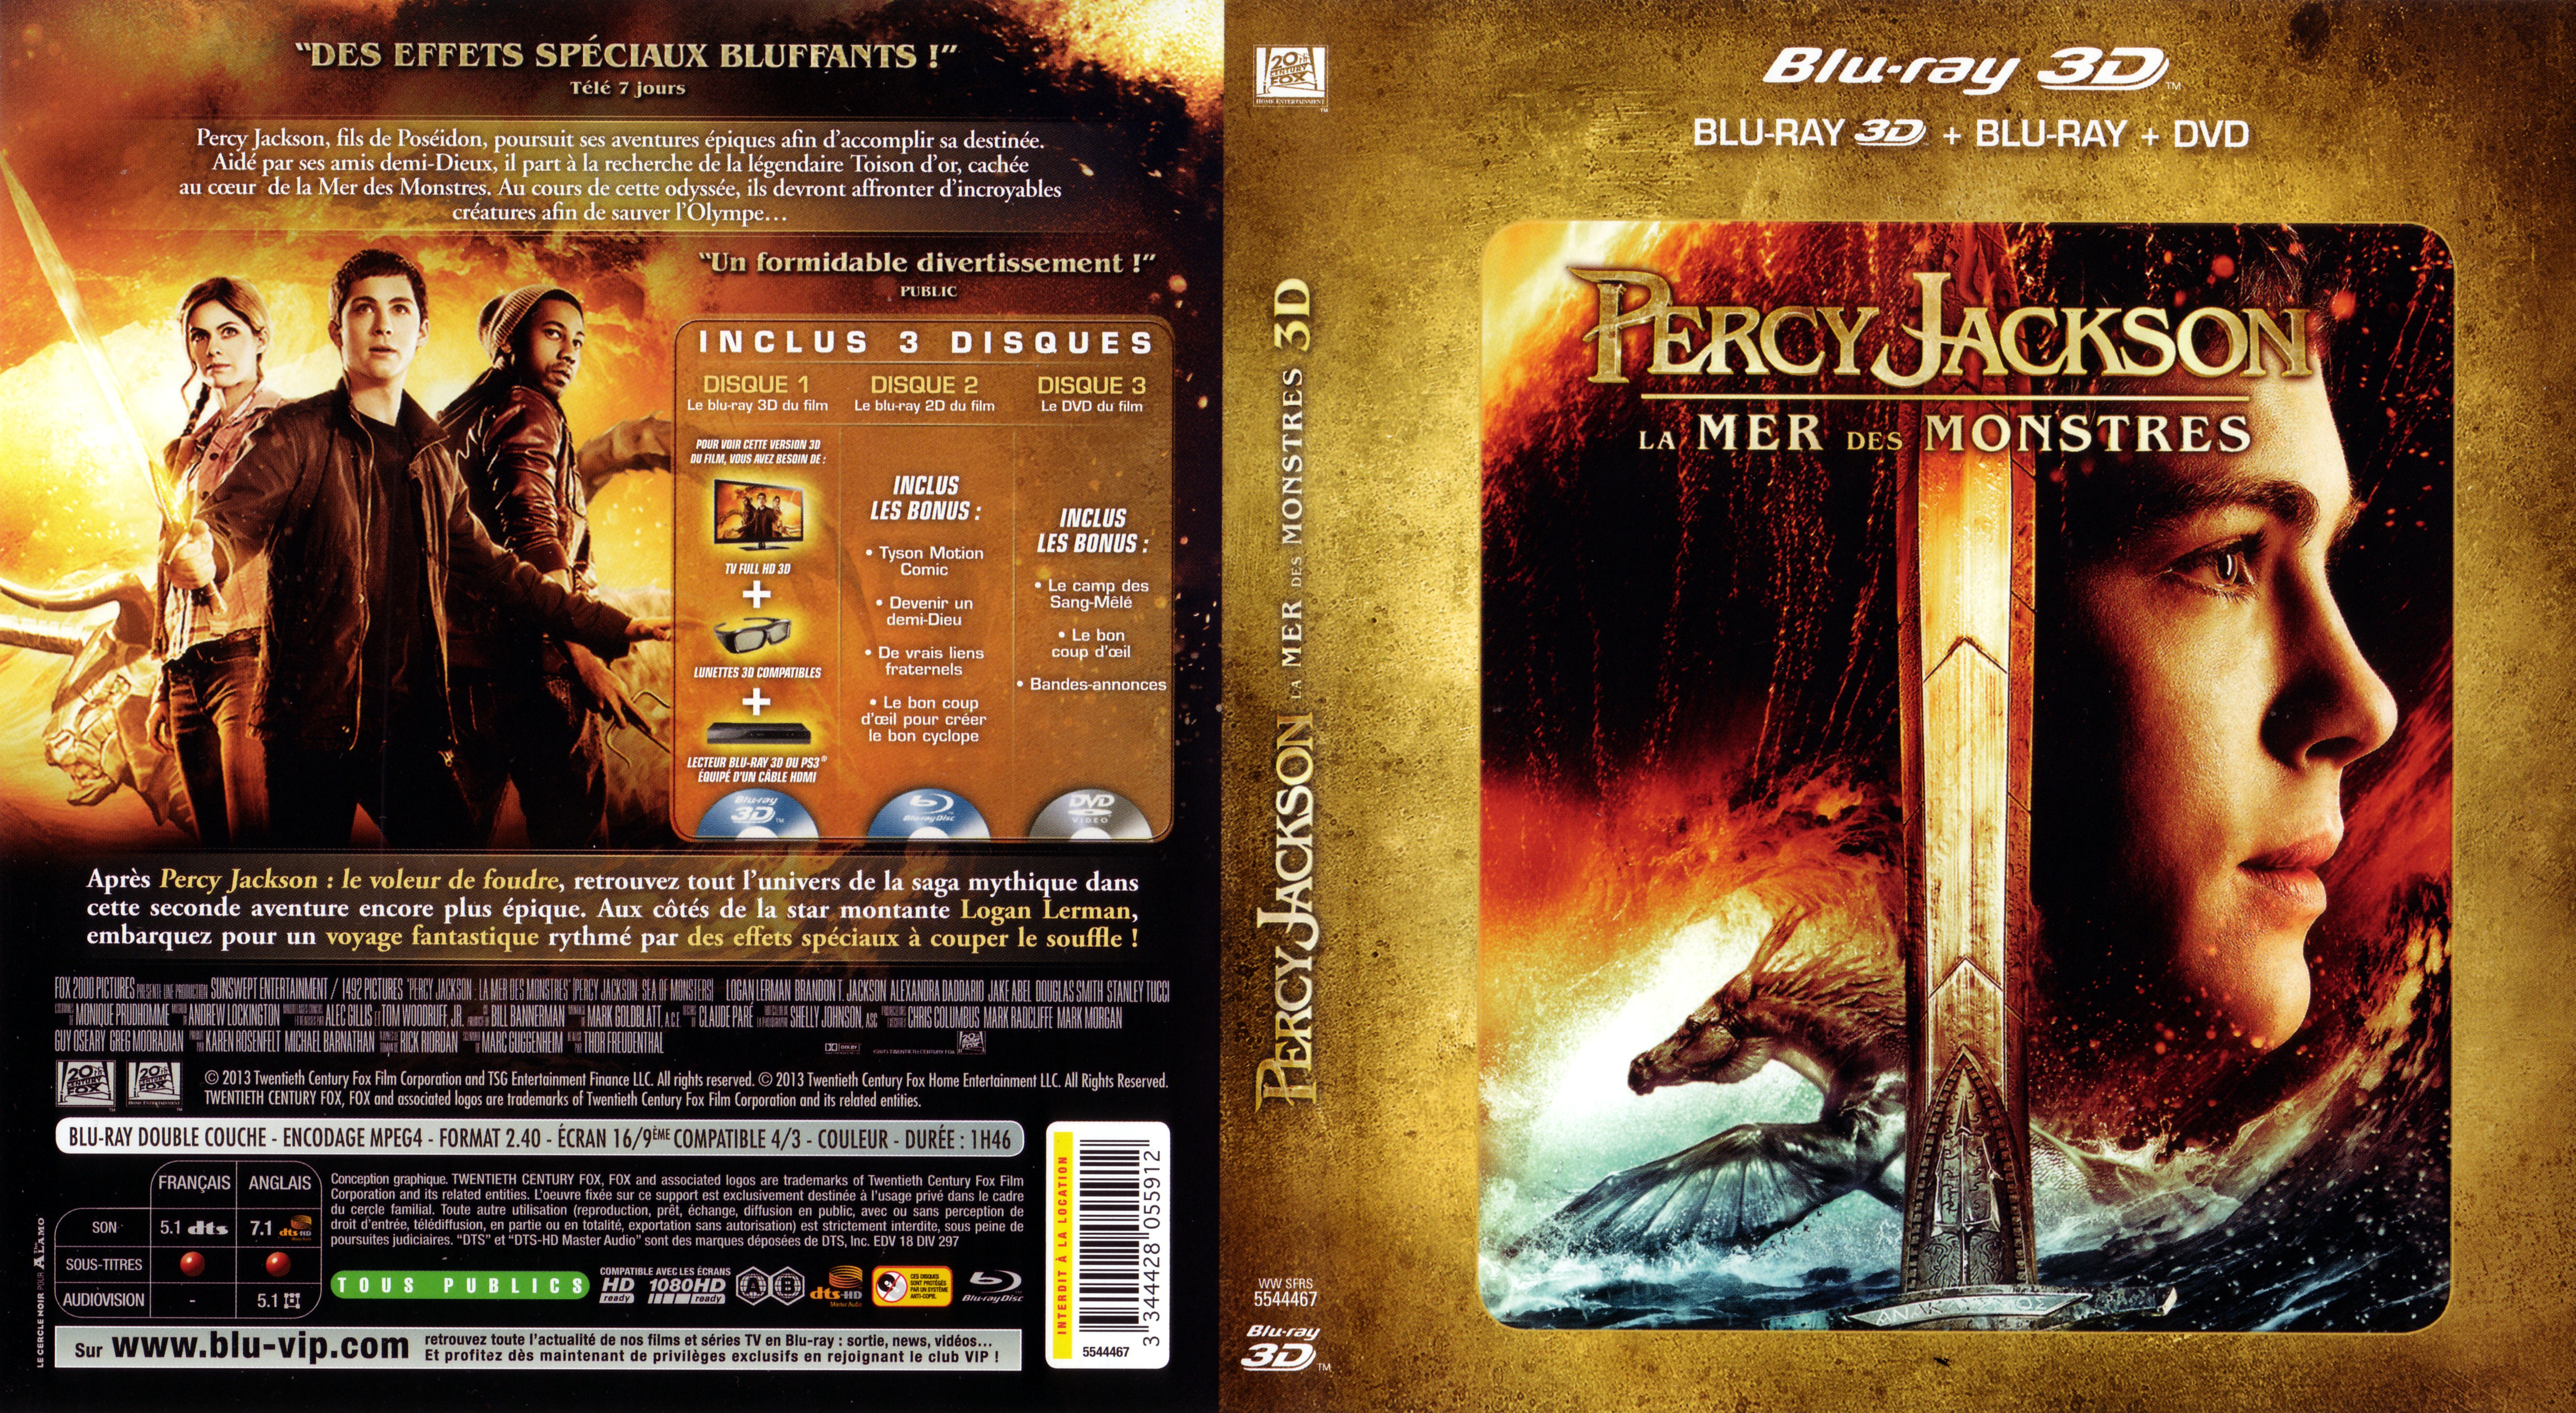 Jaquette DVD Percy Jackson La mer des monstres (BLU-RAY)